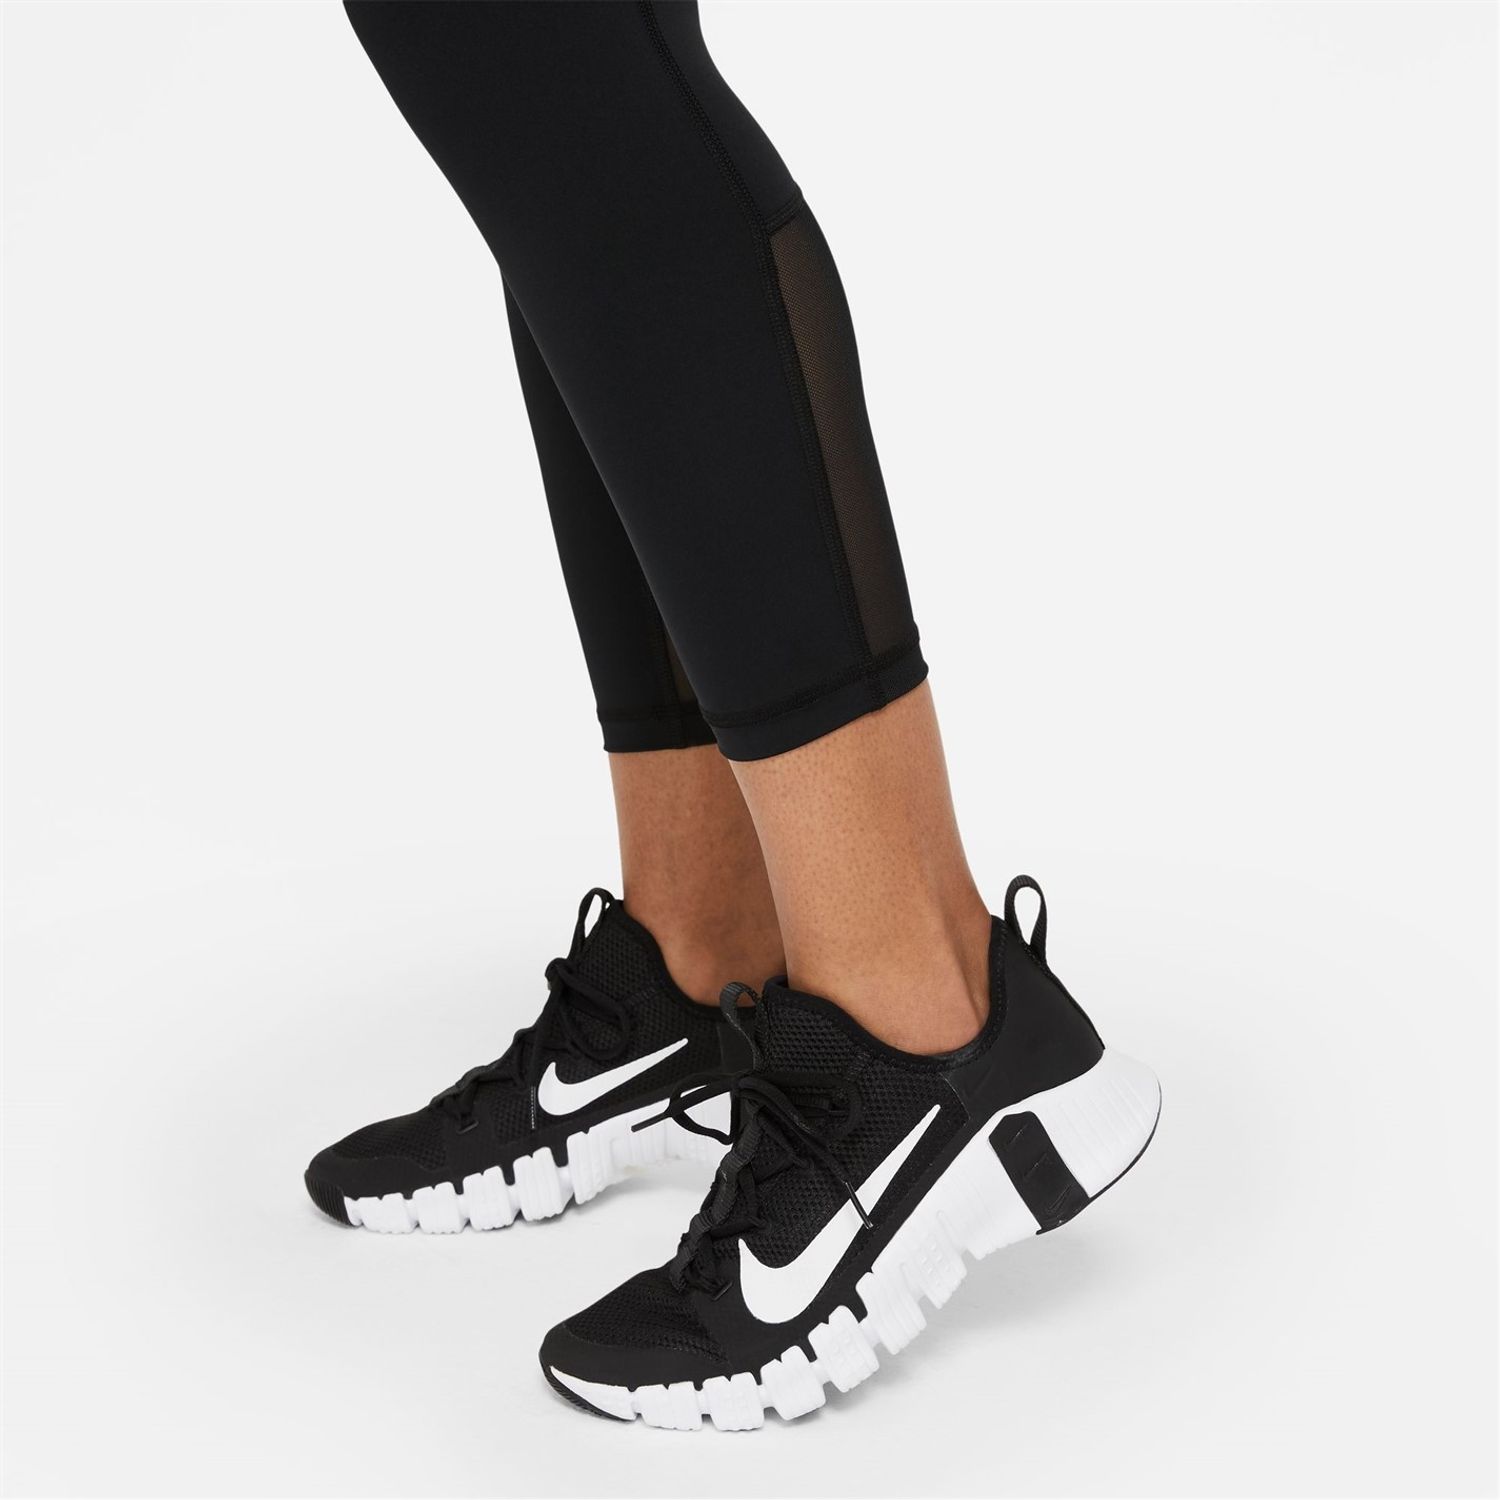 Black Nike Womens Pro 365 Mid Rise Cropped Mesh Panel Leggings